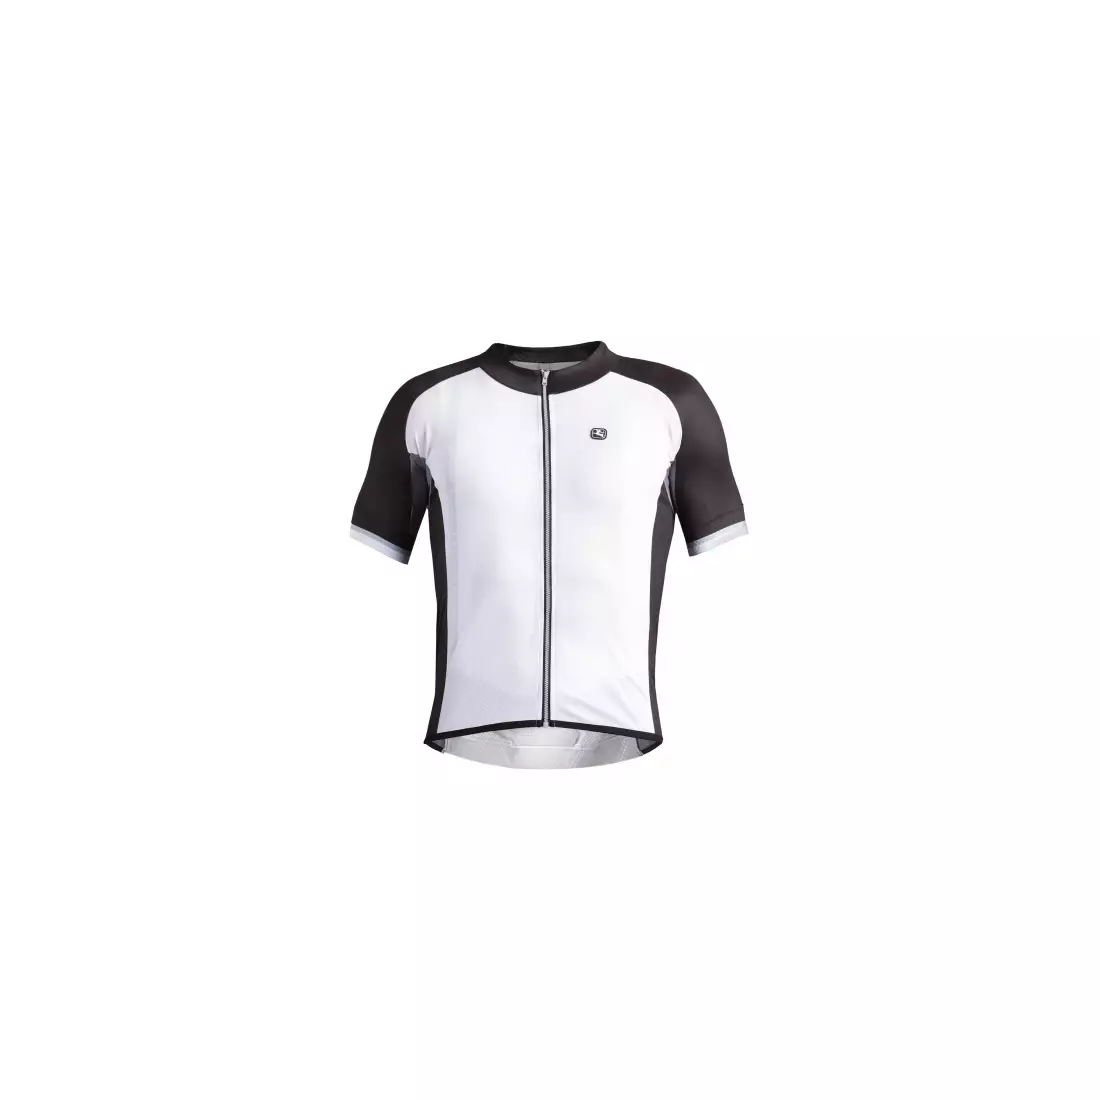 GIORDANA SILVERLINE white cycling jersey